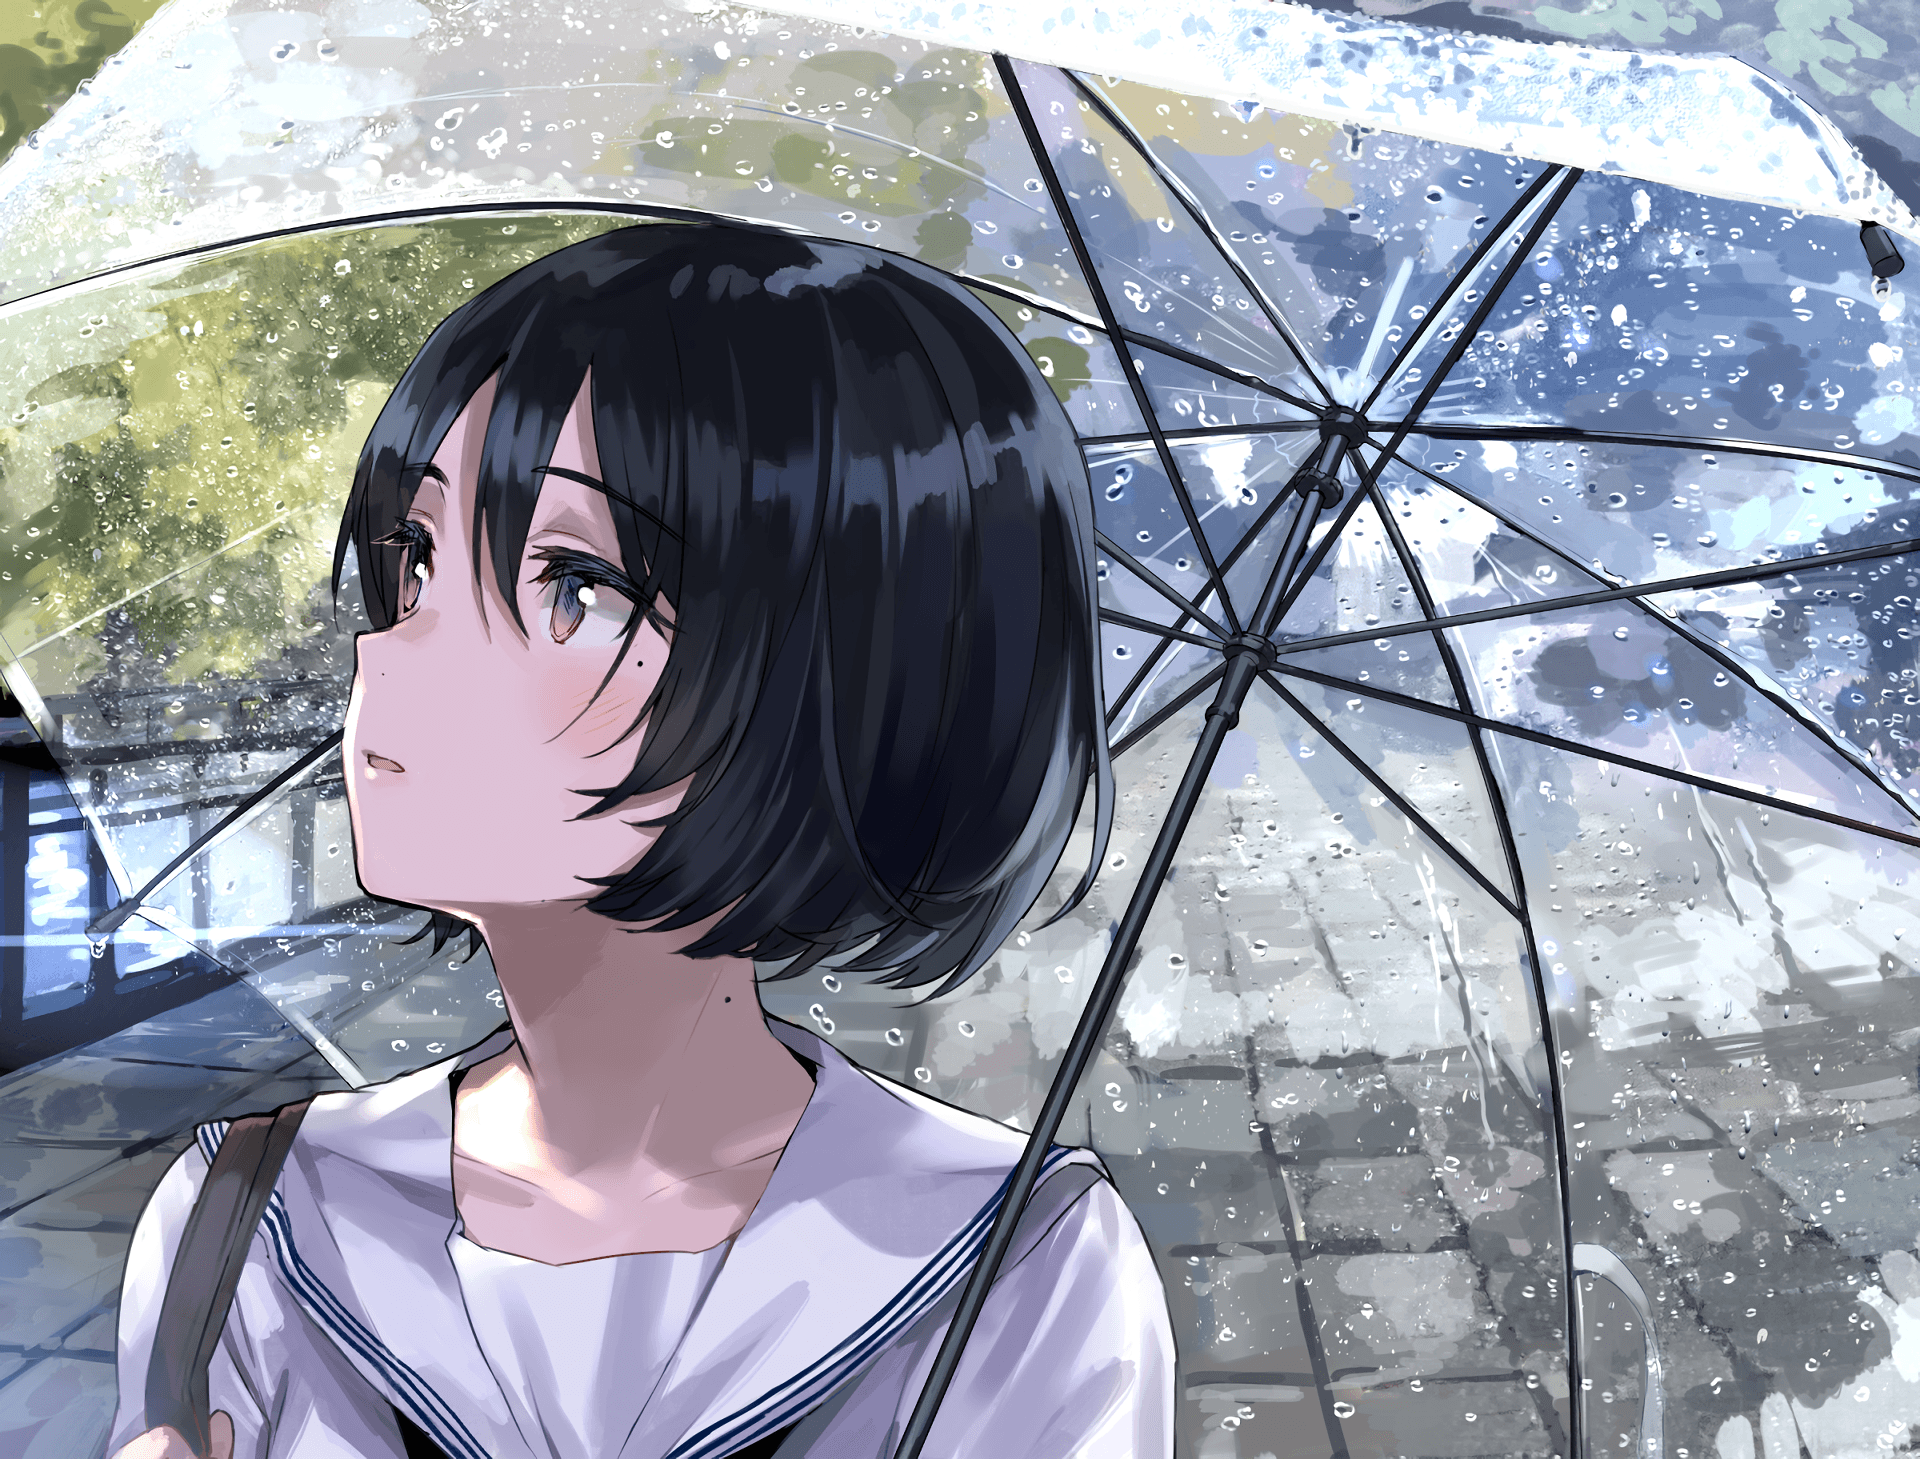 Anime Girl With Umbrella In Rain Wallpaper gambar ke 1